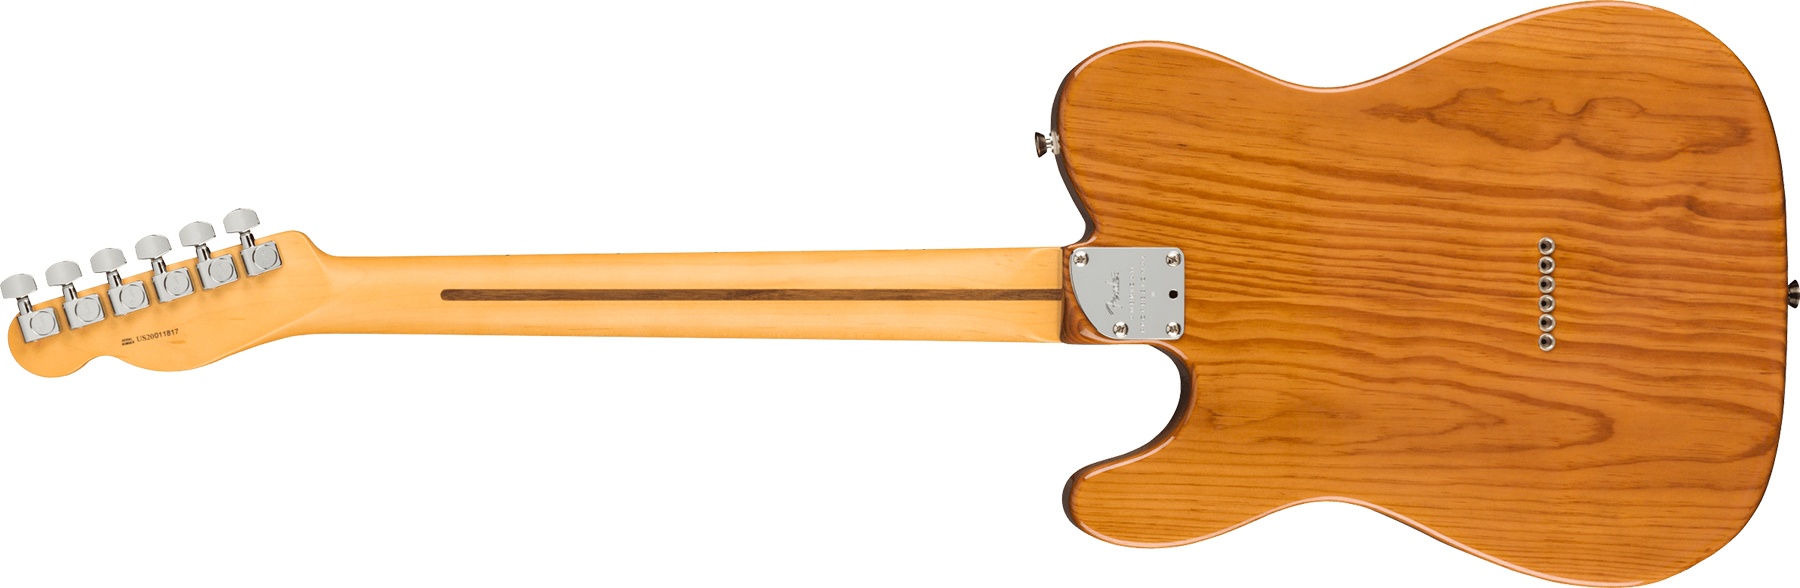 Fender Tele American Professional Ii Usa Mn - Roasted Pine - Guitarra eléctrica con forma de tel - Variation 1